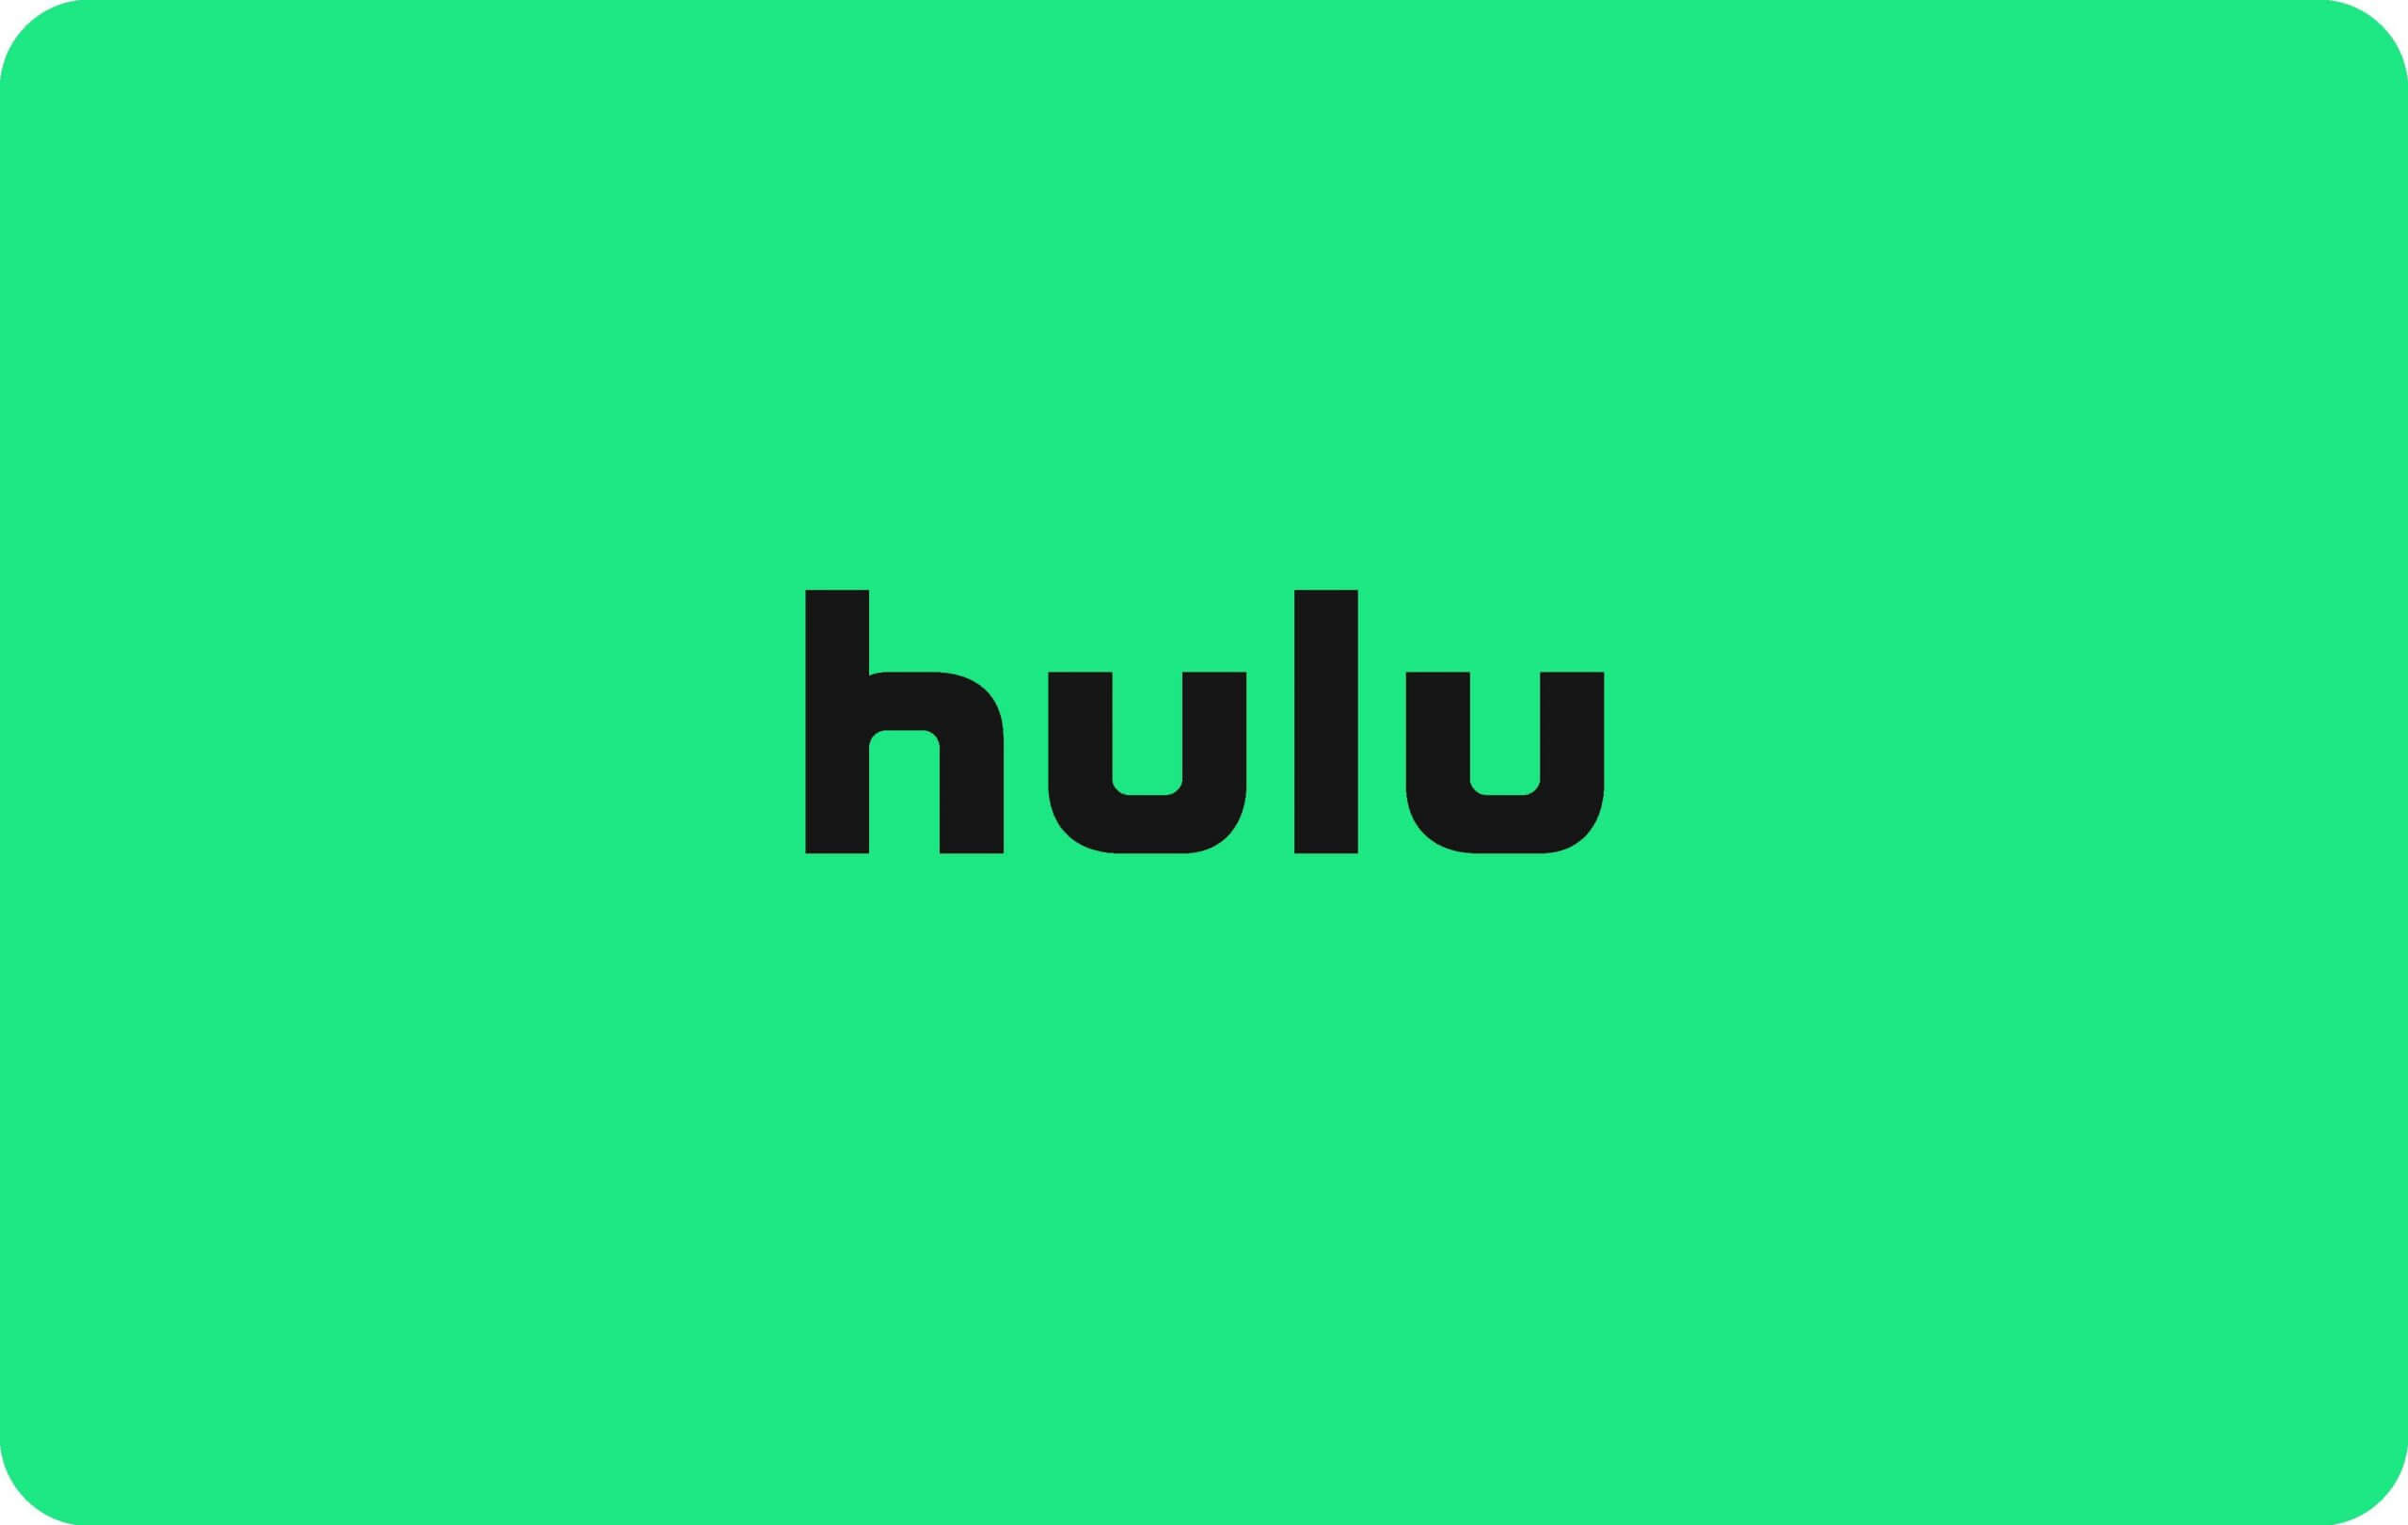 Hulu Mission statement